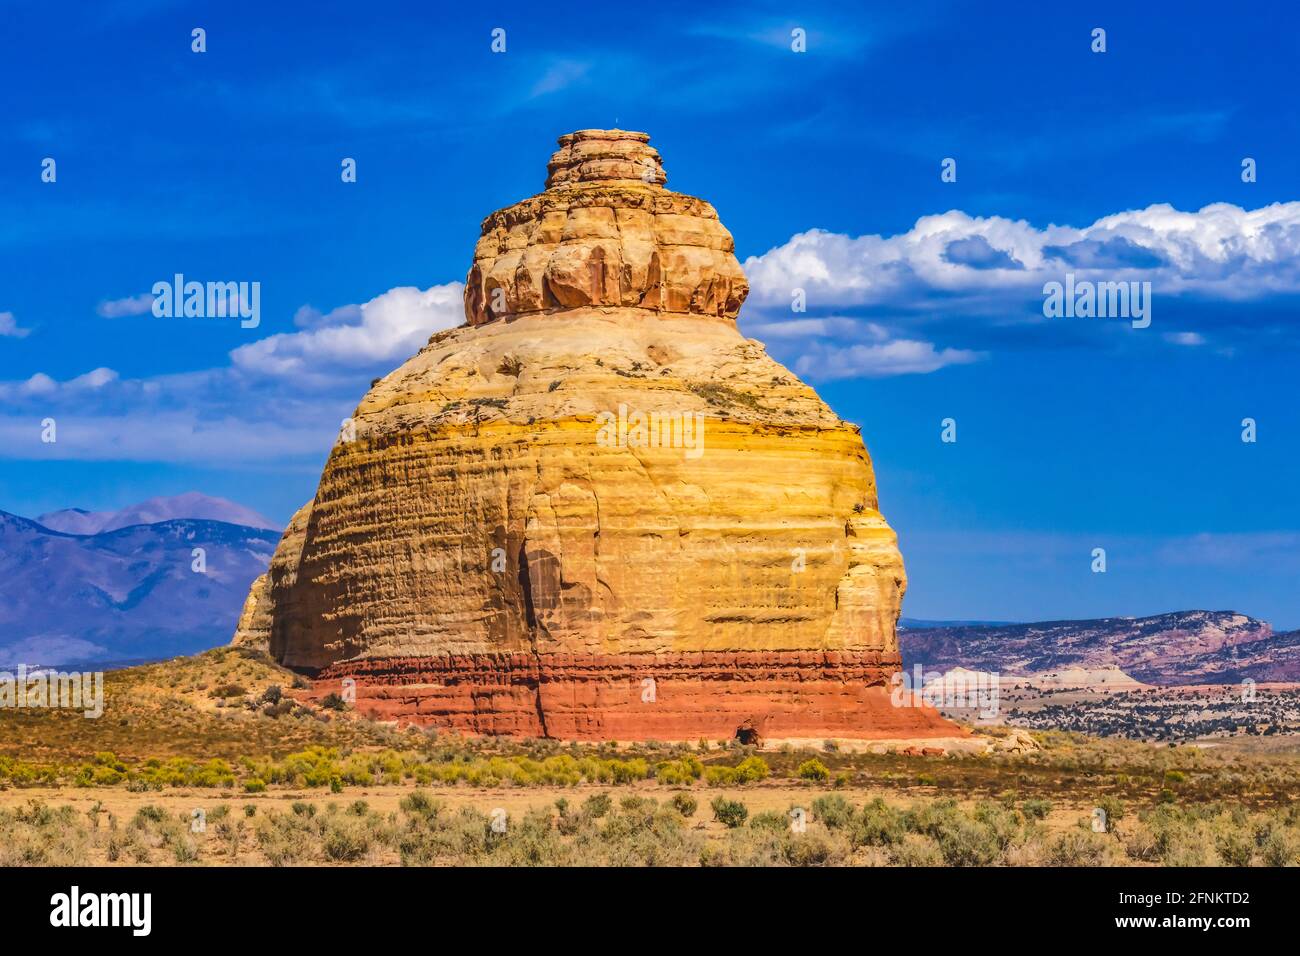 Colorful Church Rock Formation Entrance Canyonlands National Park Needles District Utah.  Rock looks like Buddhist Stupa Stock Photo